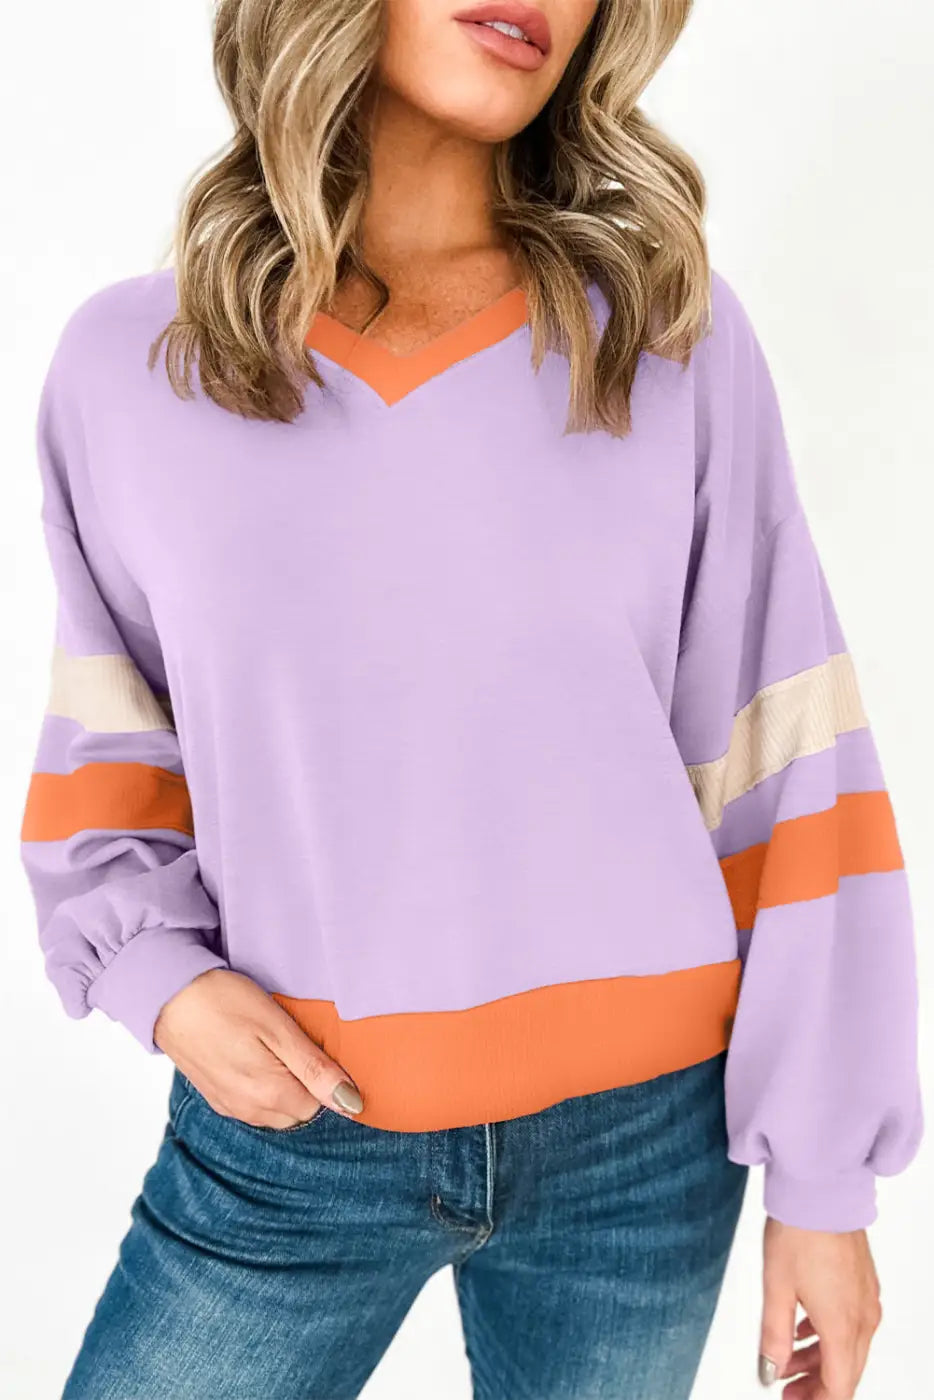 Orchid rib knit sweatshirt: lavender-orange color-block, striped sleeves, v-neckline. Relax